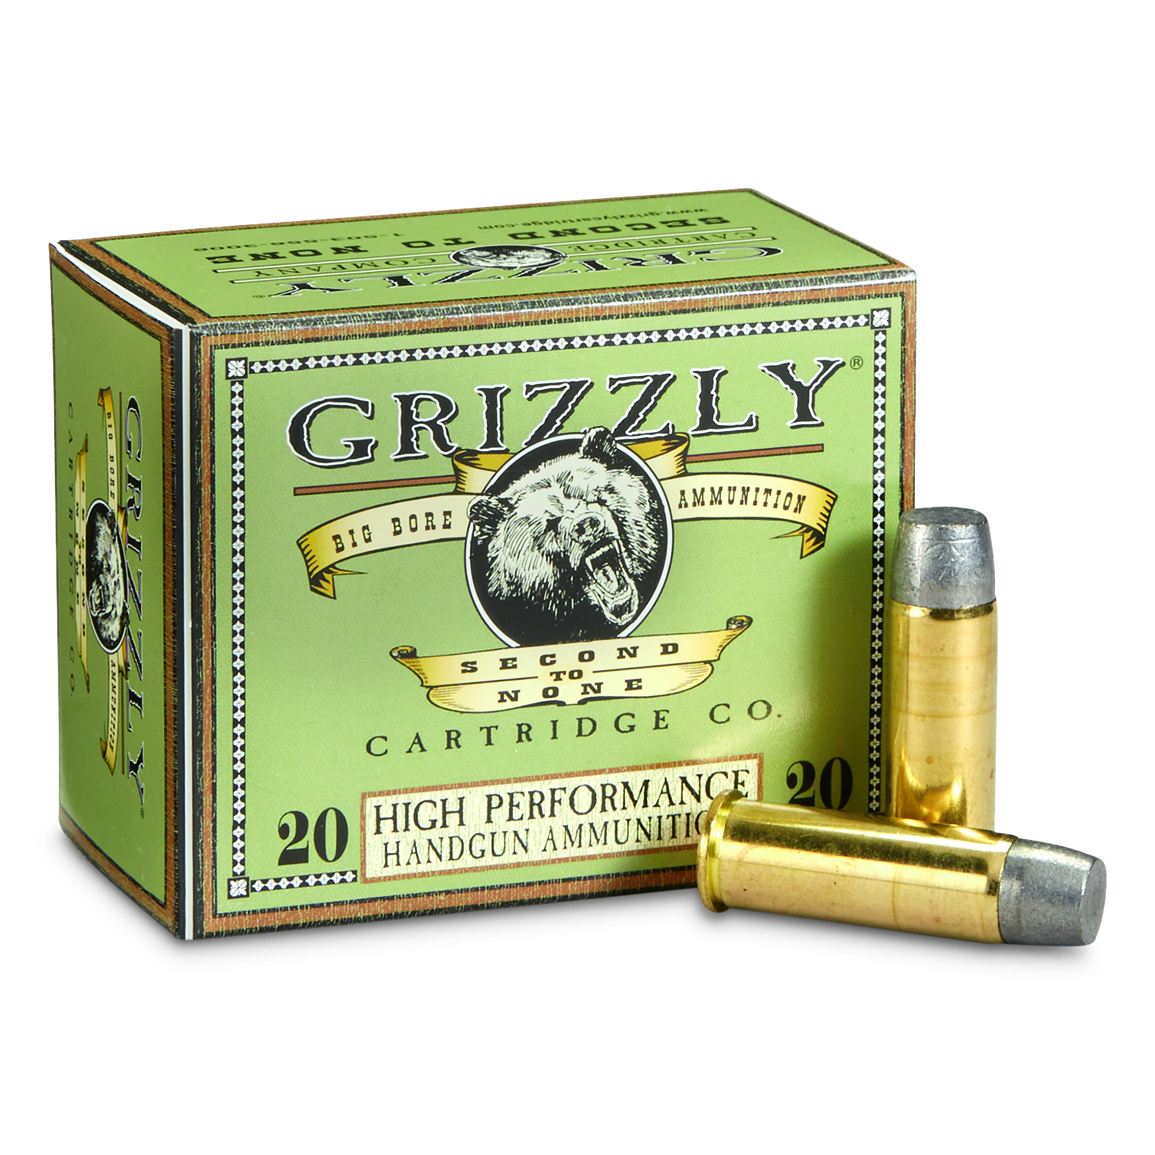 Grizzly Cartridge Co. High Performance Handgun, .44 Magnum, WFNGC, 300 Grain, 20 Rounds